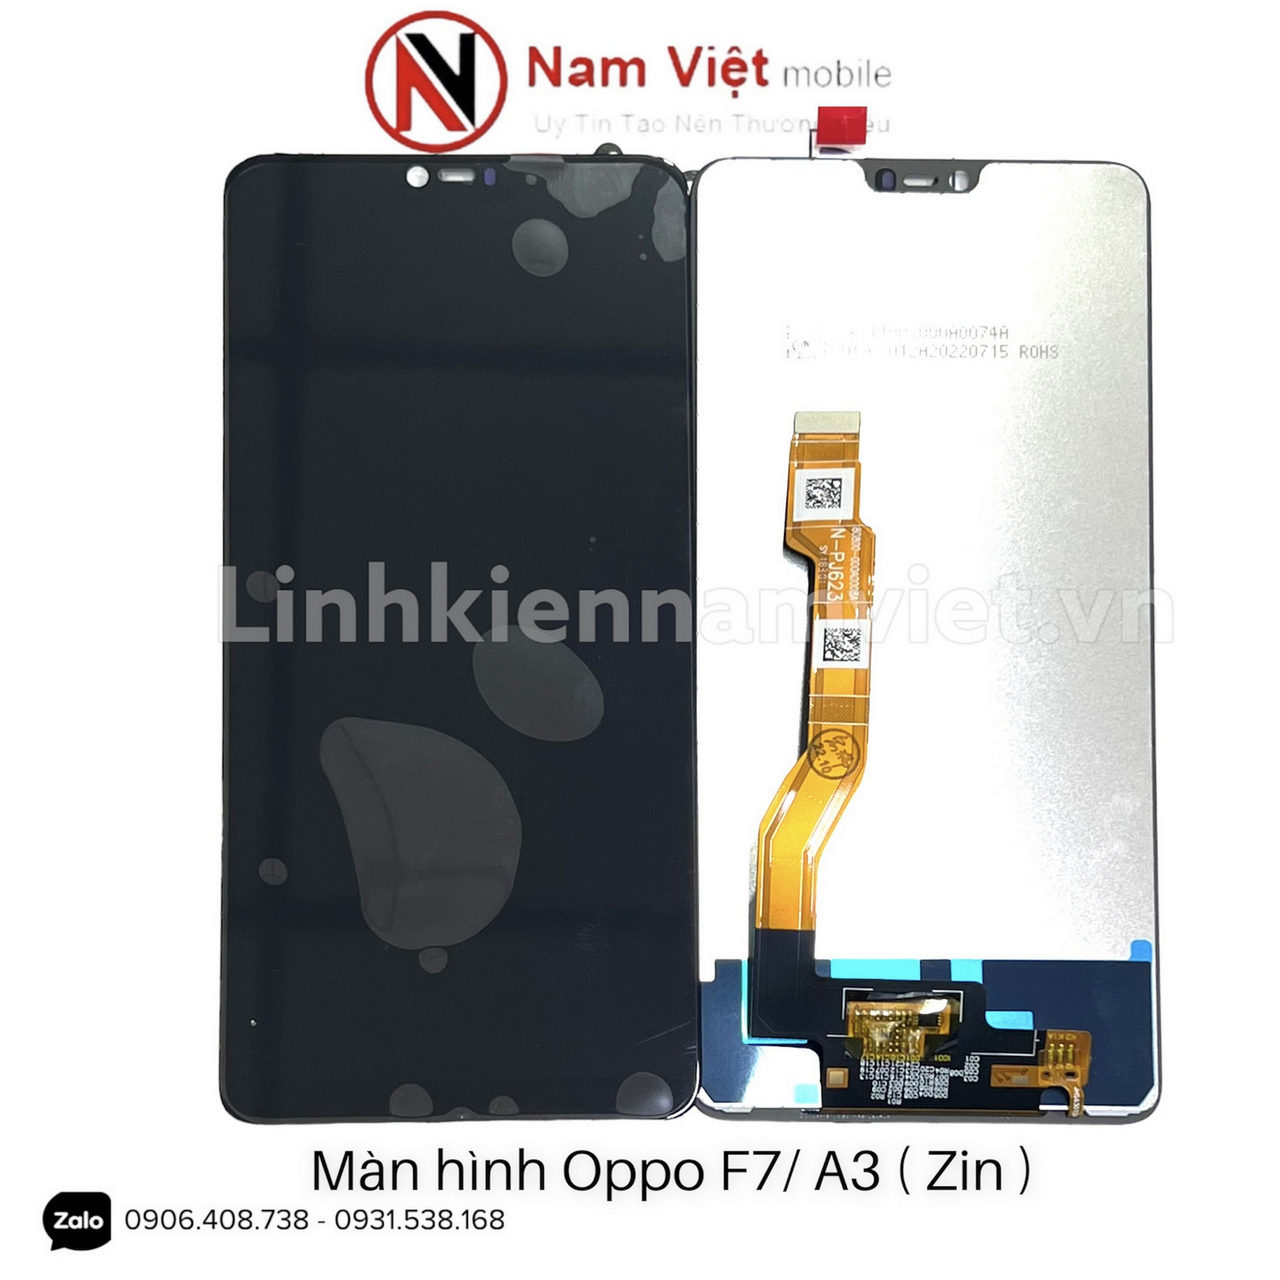 Man-hinh-Oppo-F7-A3-Zin